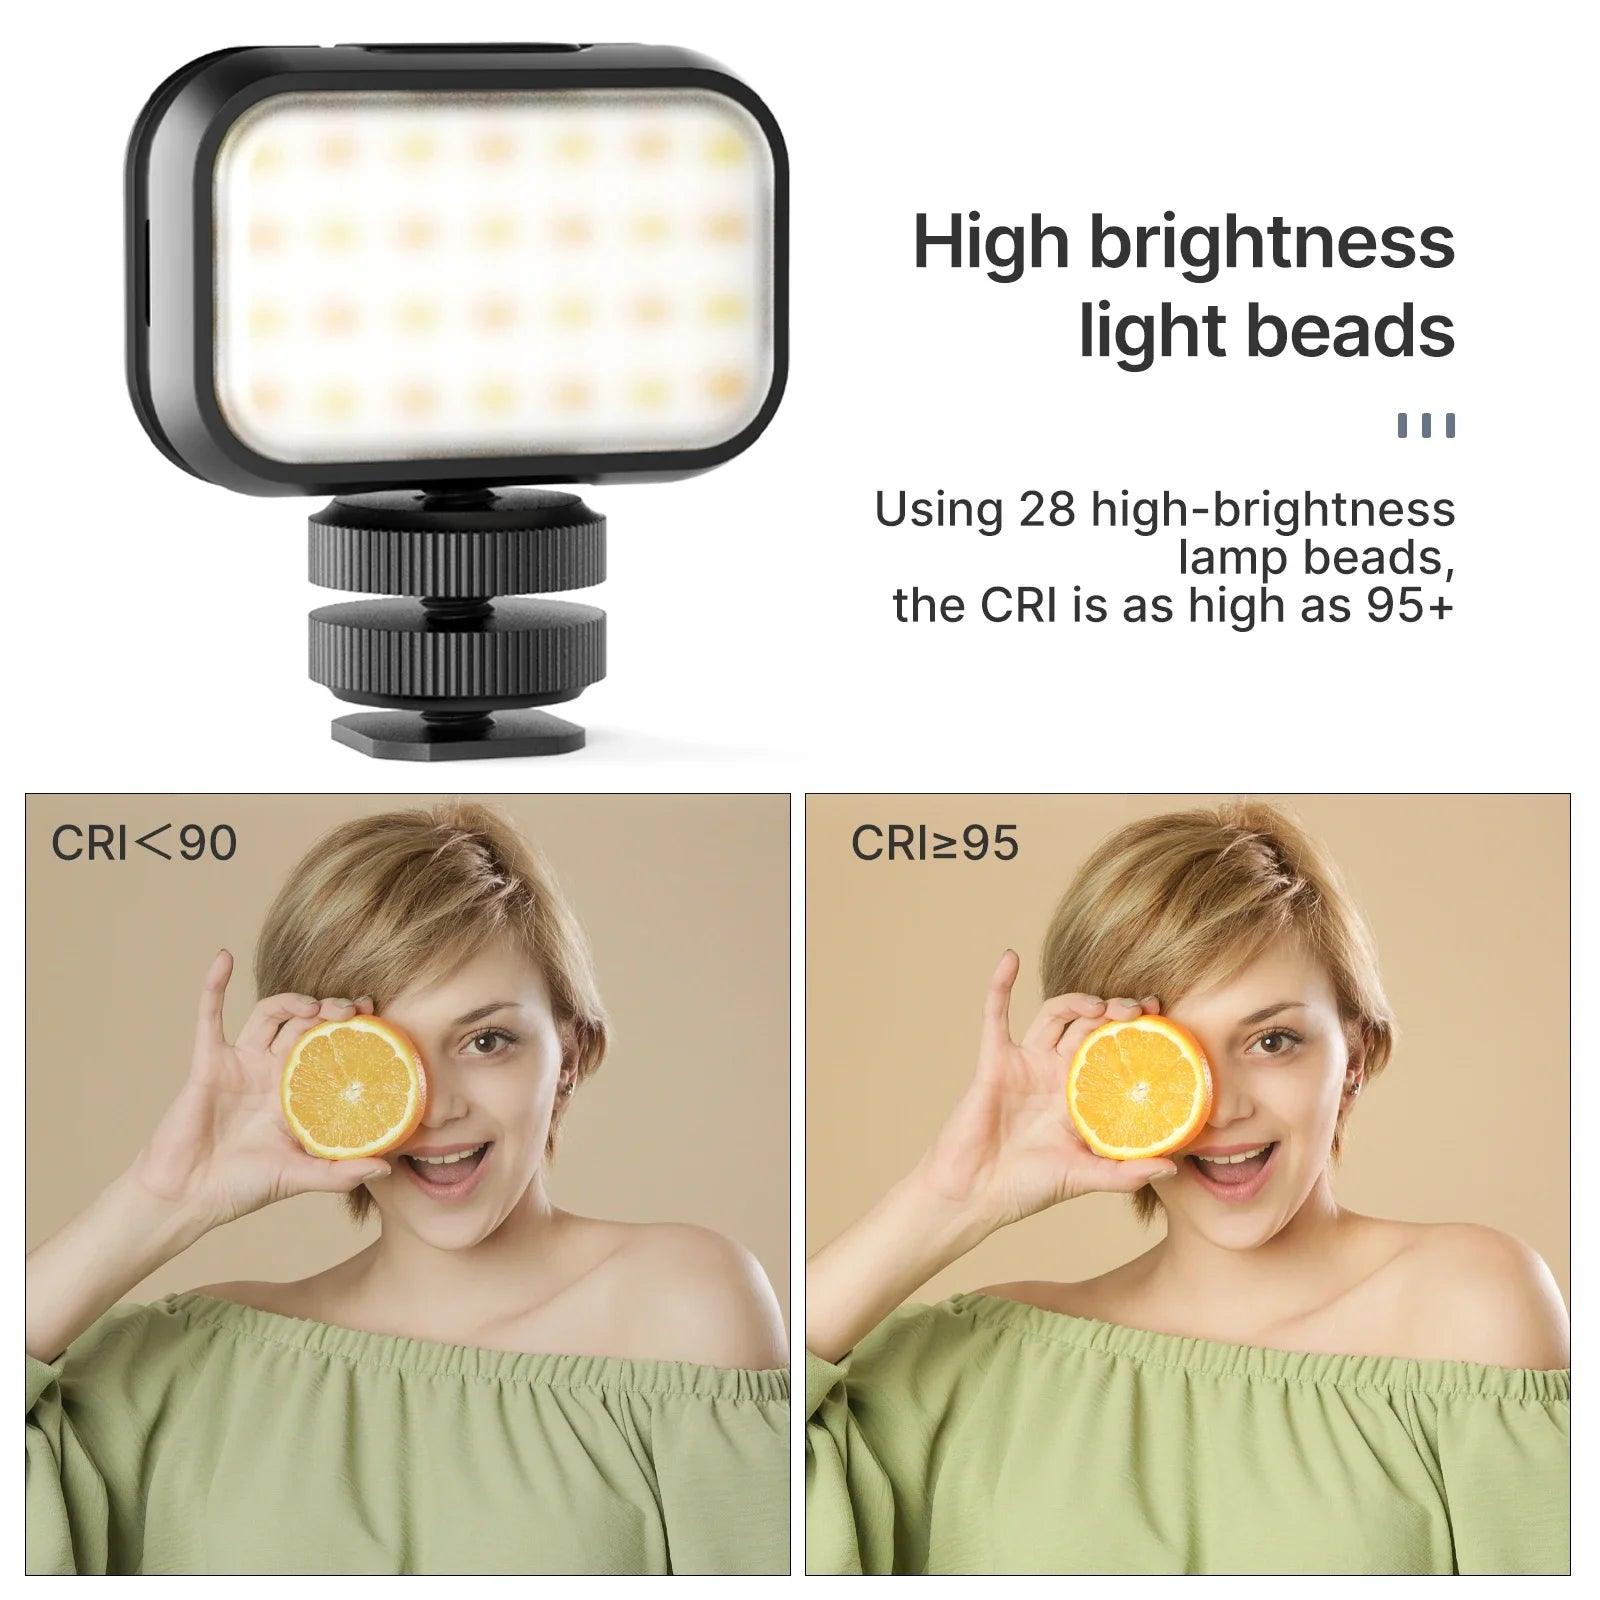 Ulanzi VL28 5500K Mini LED Video Light for GoPro, iPhone - Compact Rechargeable On-Camera Lighting Kit  ourlum.com   